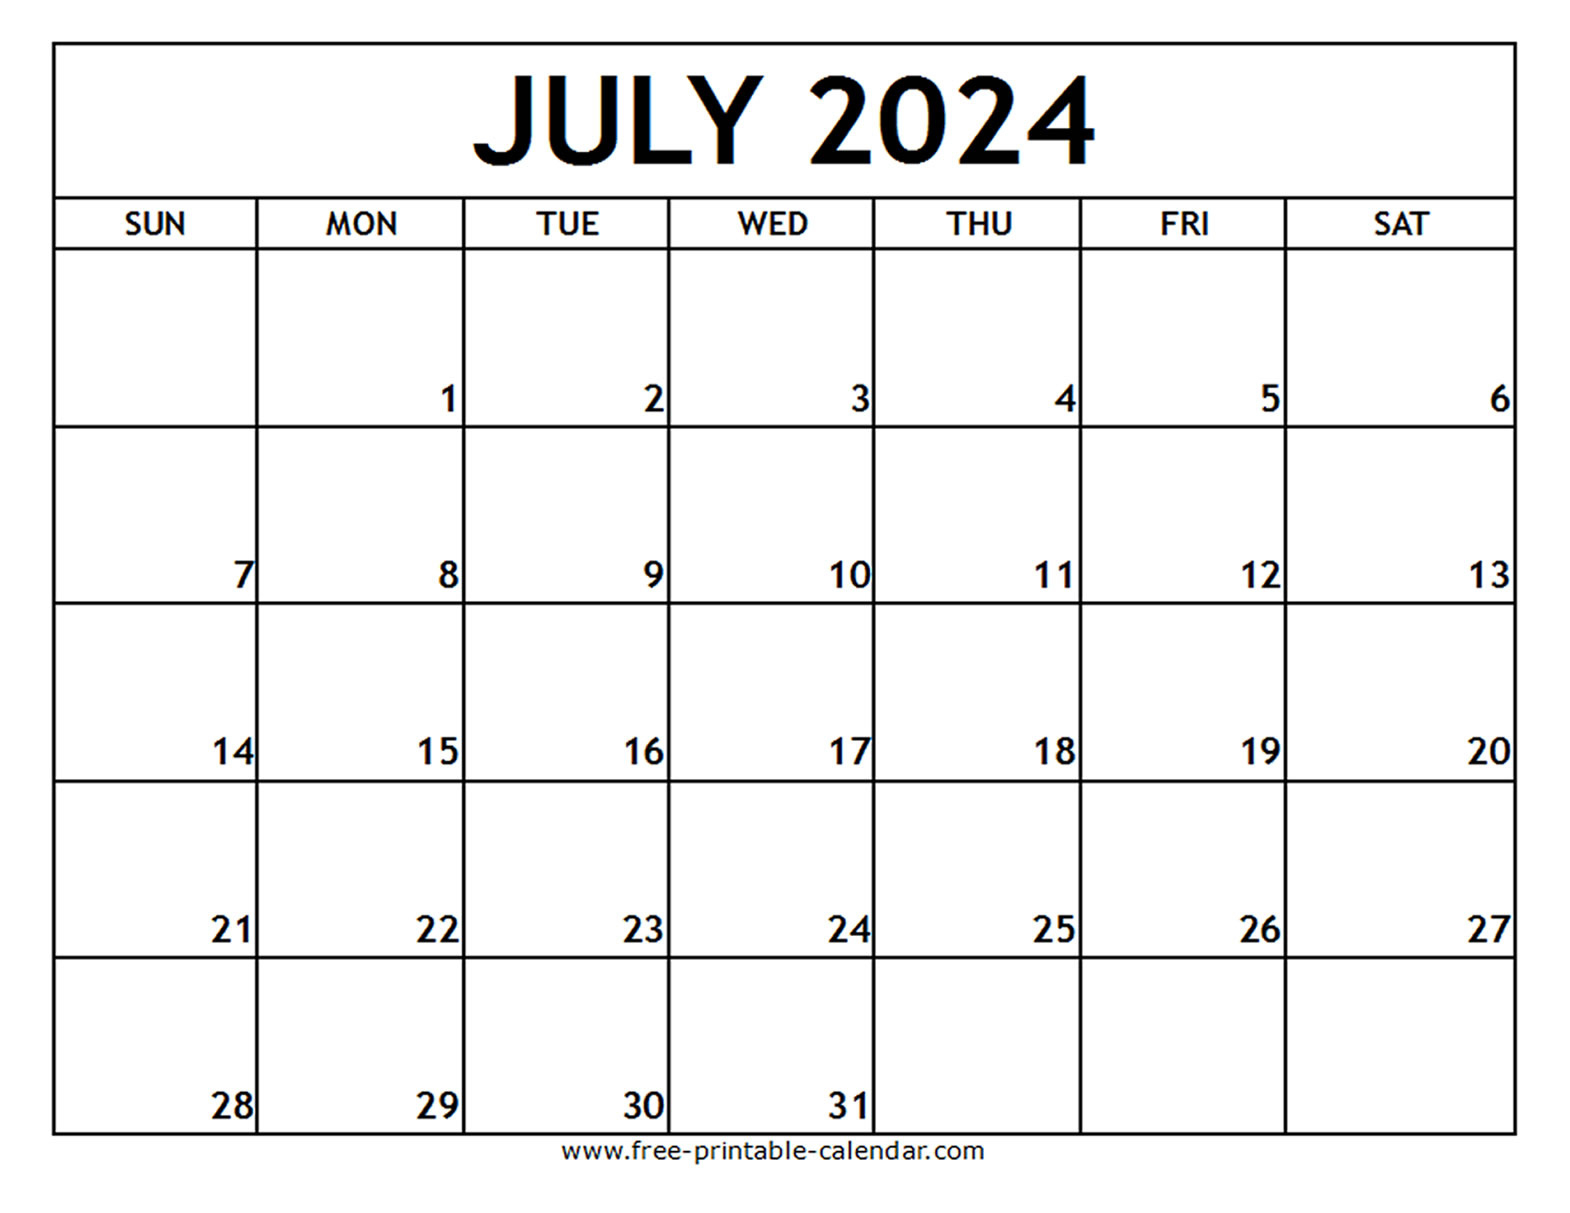 July 2024 Printable Calendar - Free-Printable-Calendar throughout July 2024 Printable Calendar Word